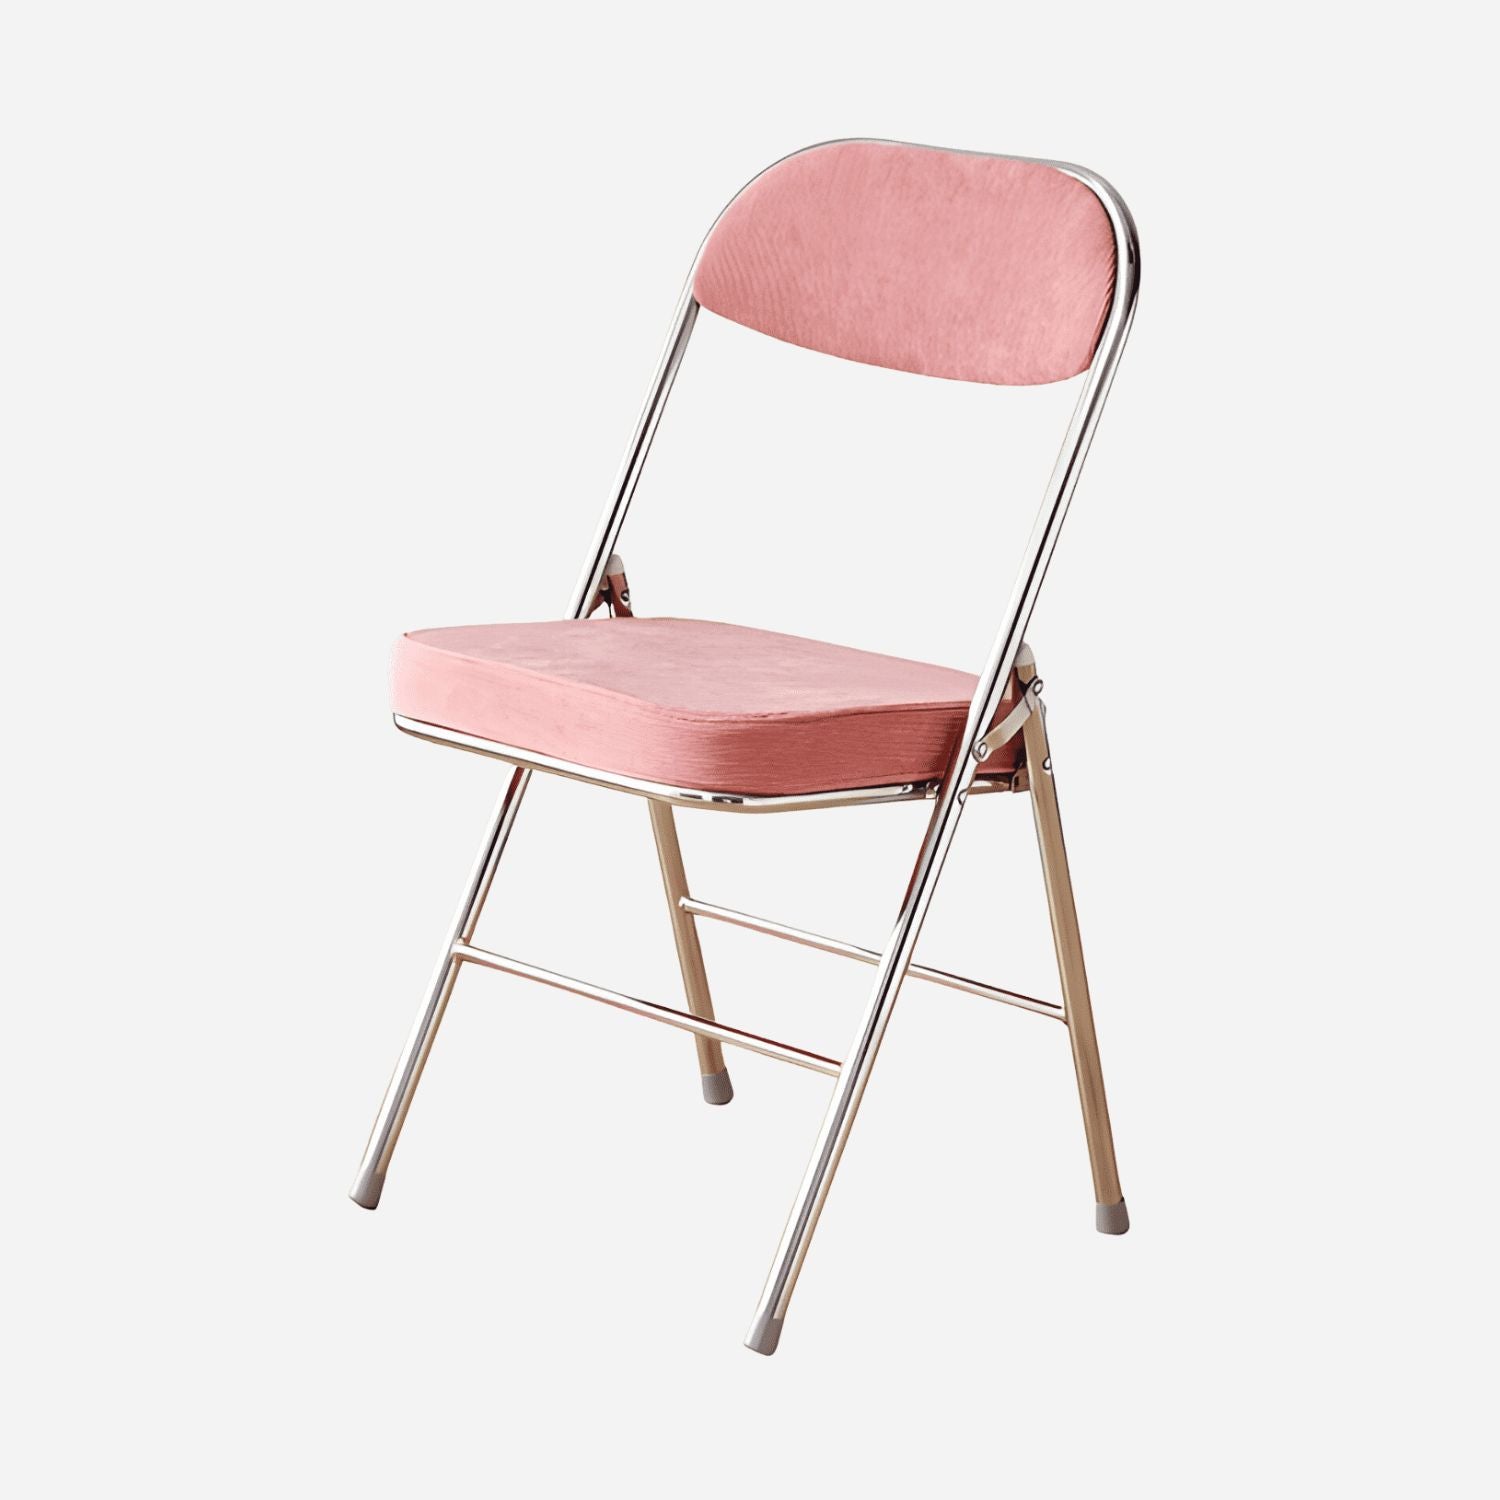 Acrylin foldable chair pink metal legs plush seat